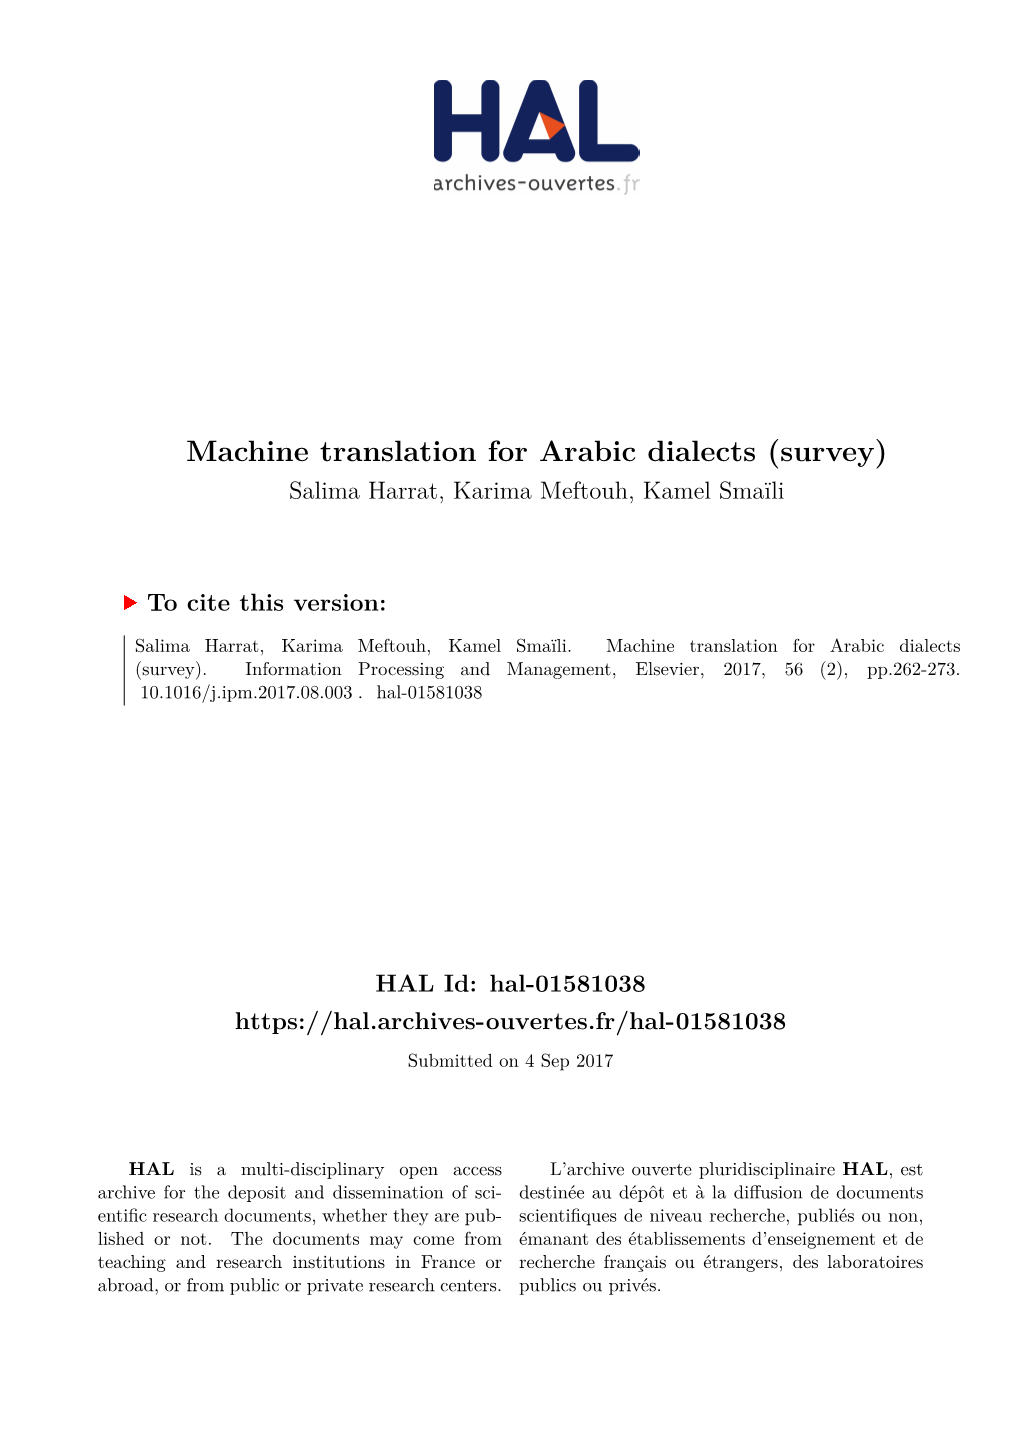 Machine Translation for Arabic Dialects (Survey) Salima Harrat, Karima Meftouh, Kamel Smaïli